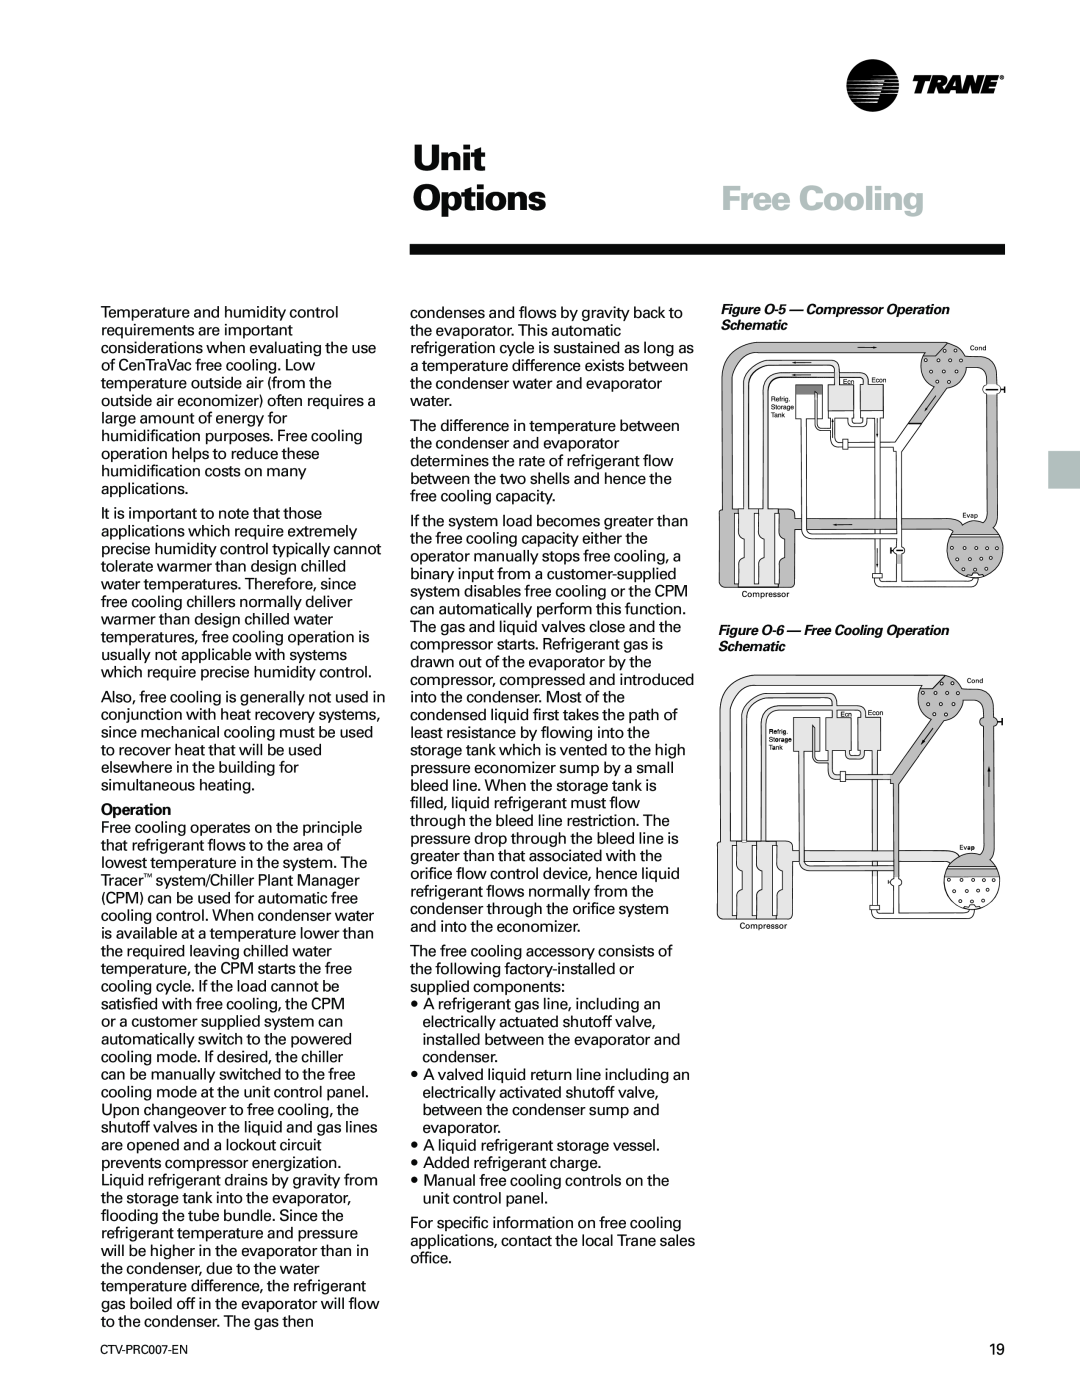 Trane ctv-prc007-en manual Unit, Options, Free Cooling, Operation, A liquid refrigerant storage vessel 